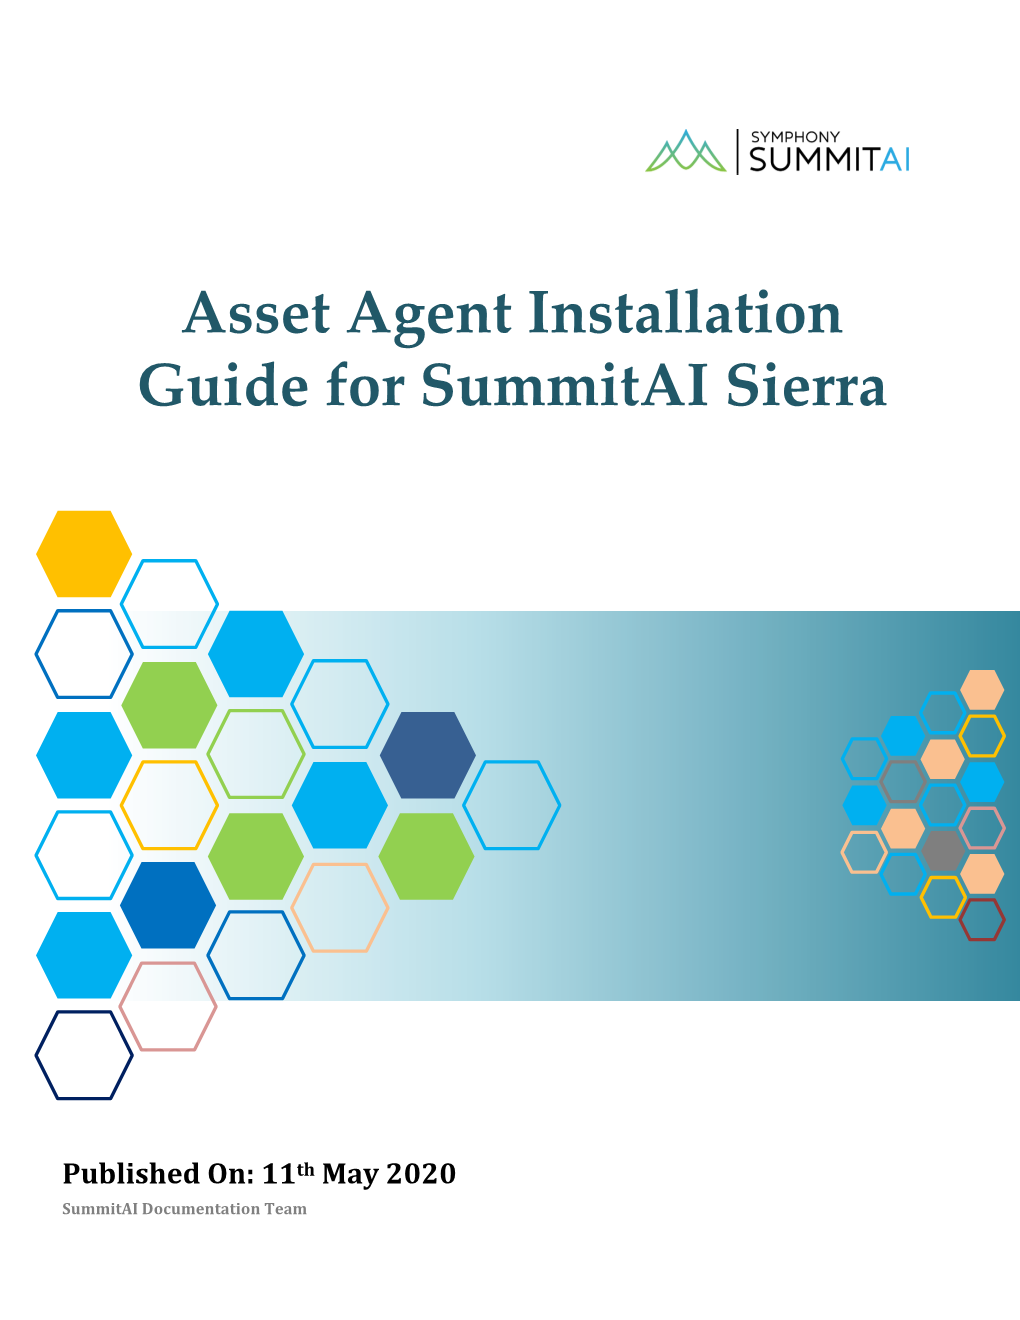 Asset Agent Installation Guide for Summitai Sierra